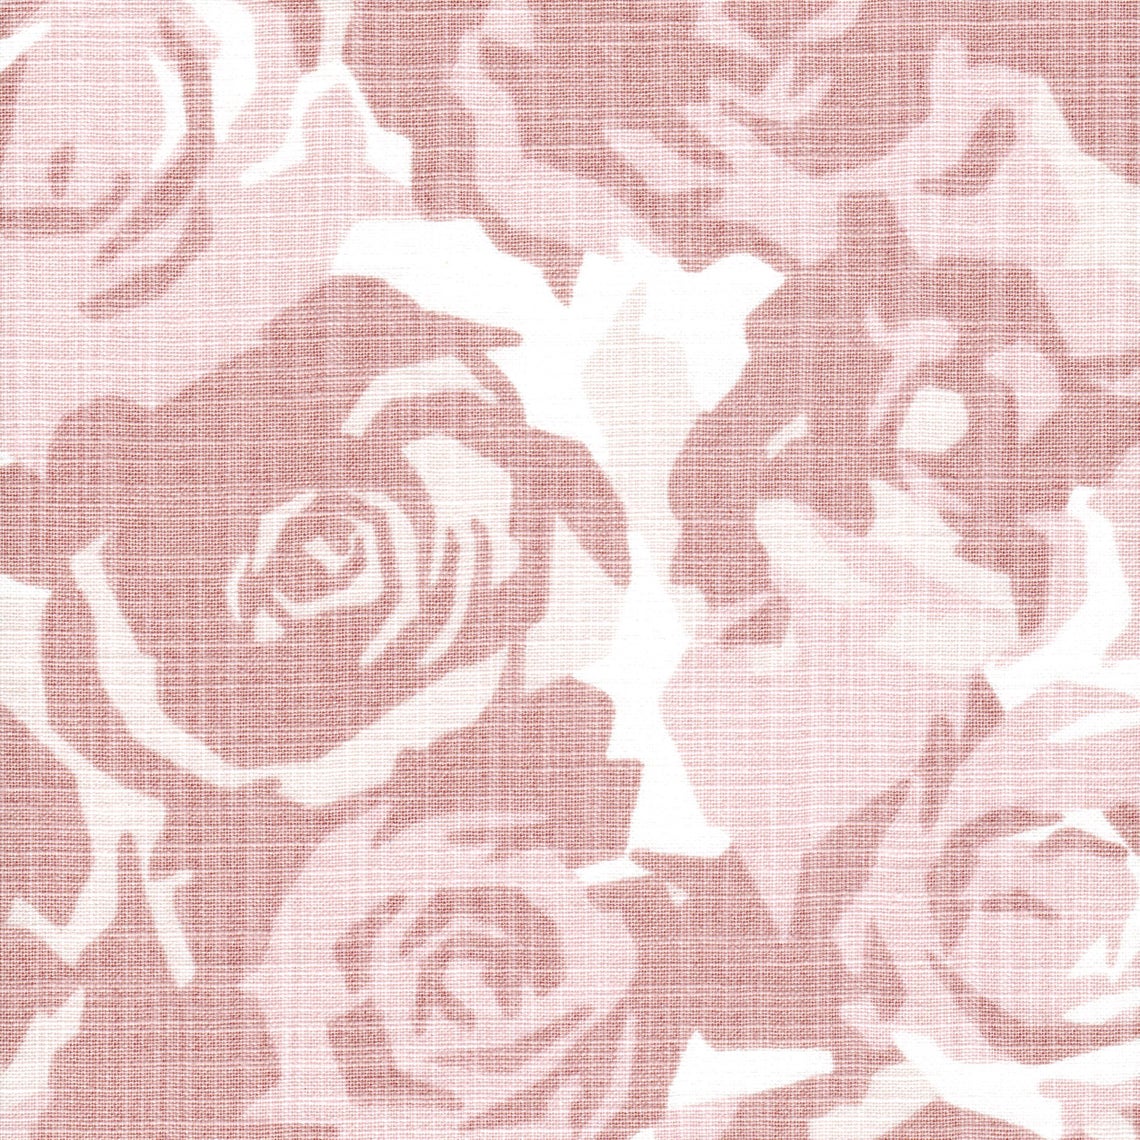 shower curtain in farrah blush floral